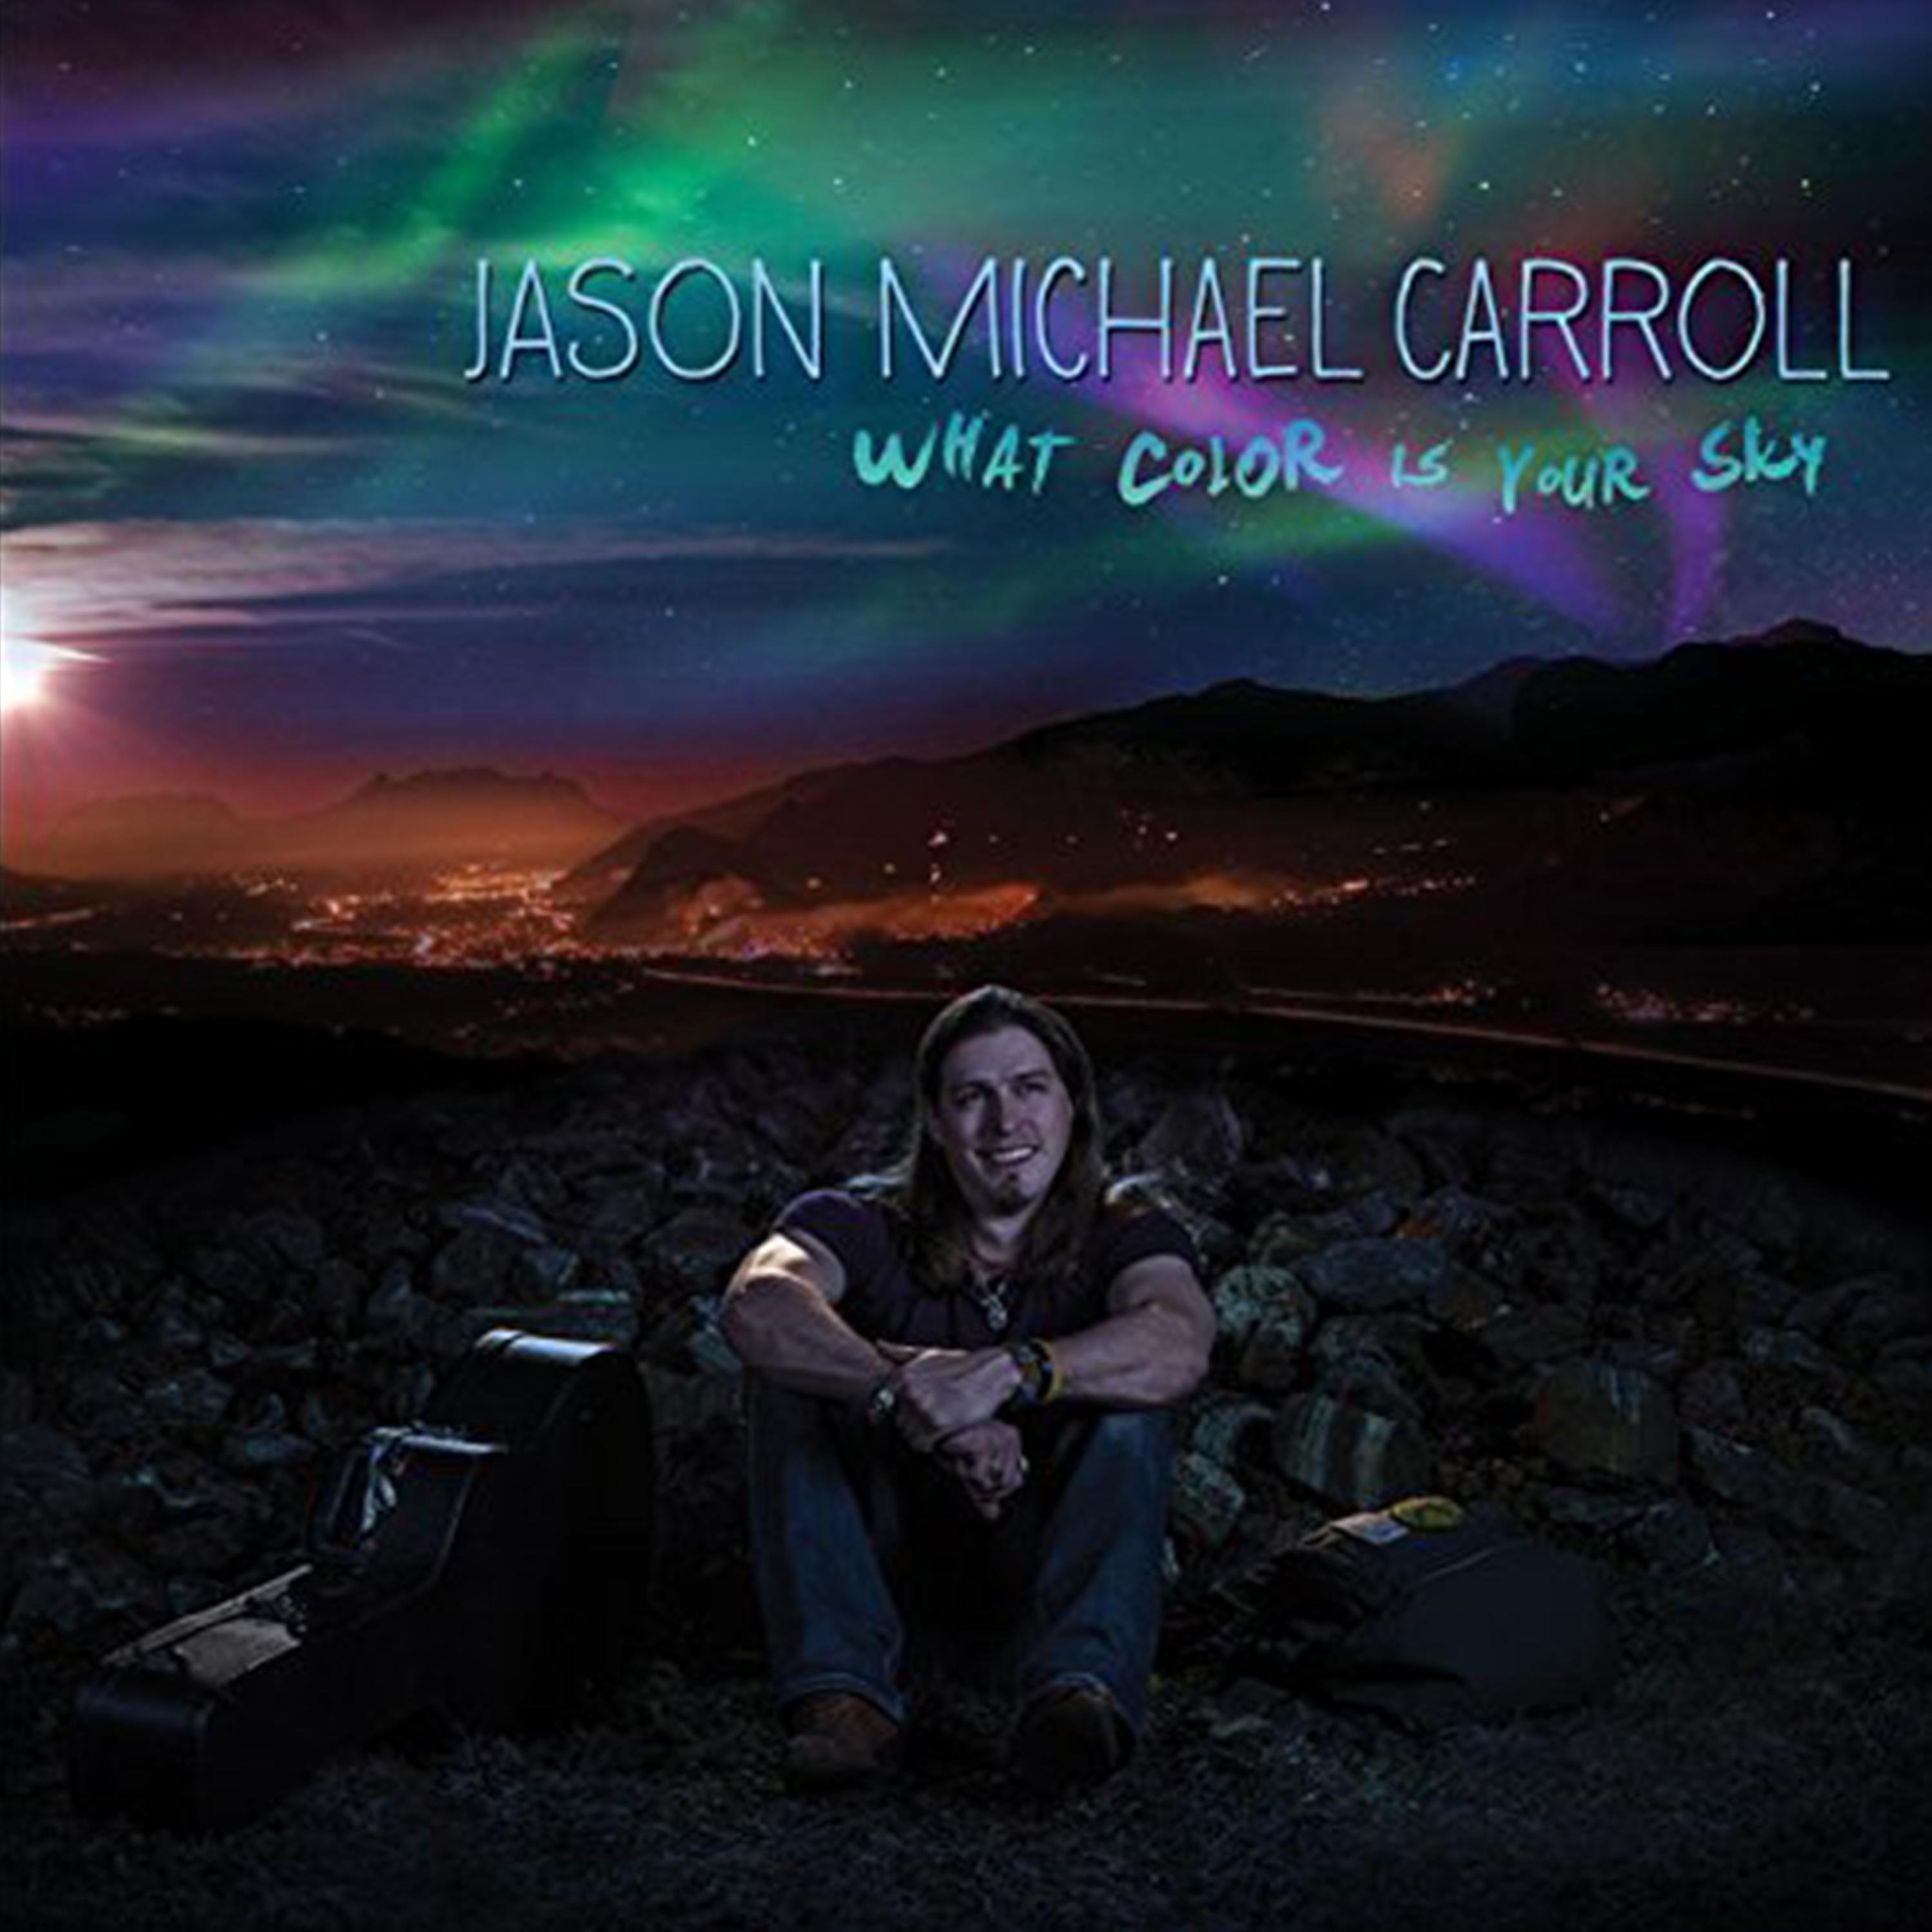 Jason Michael Carroll - Does He Know